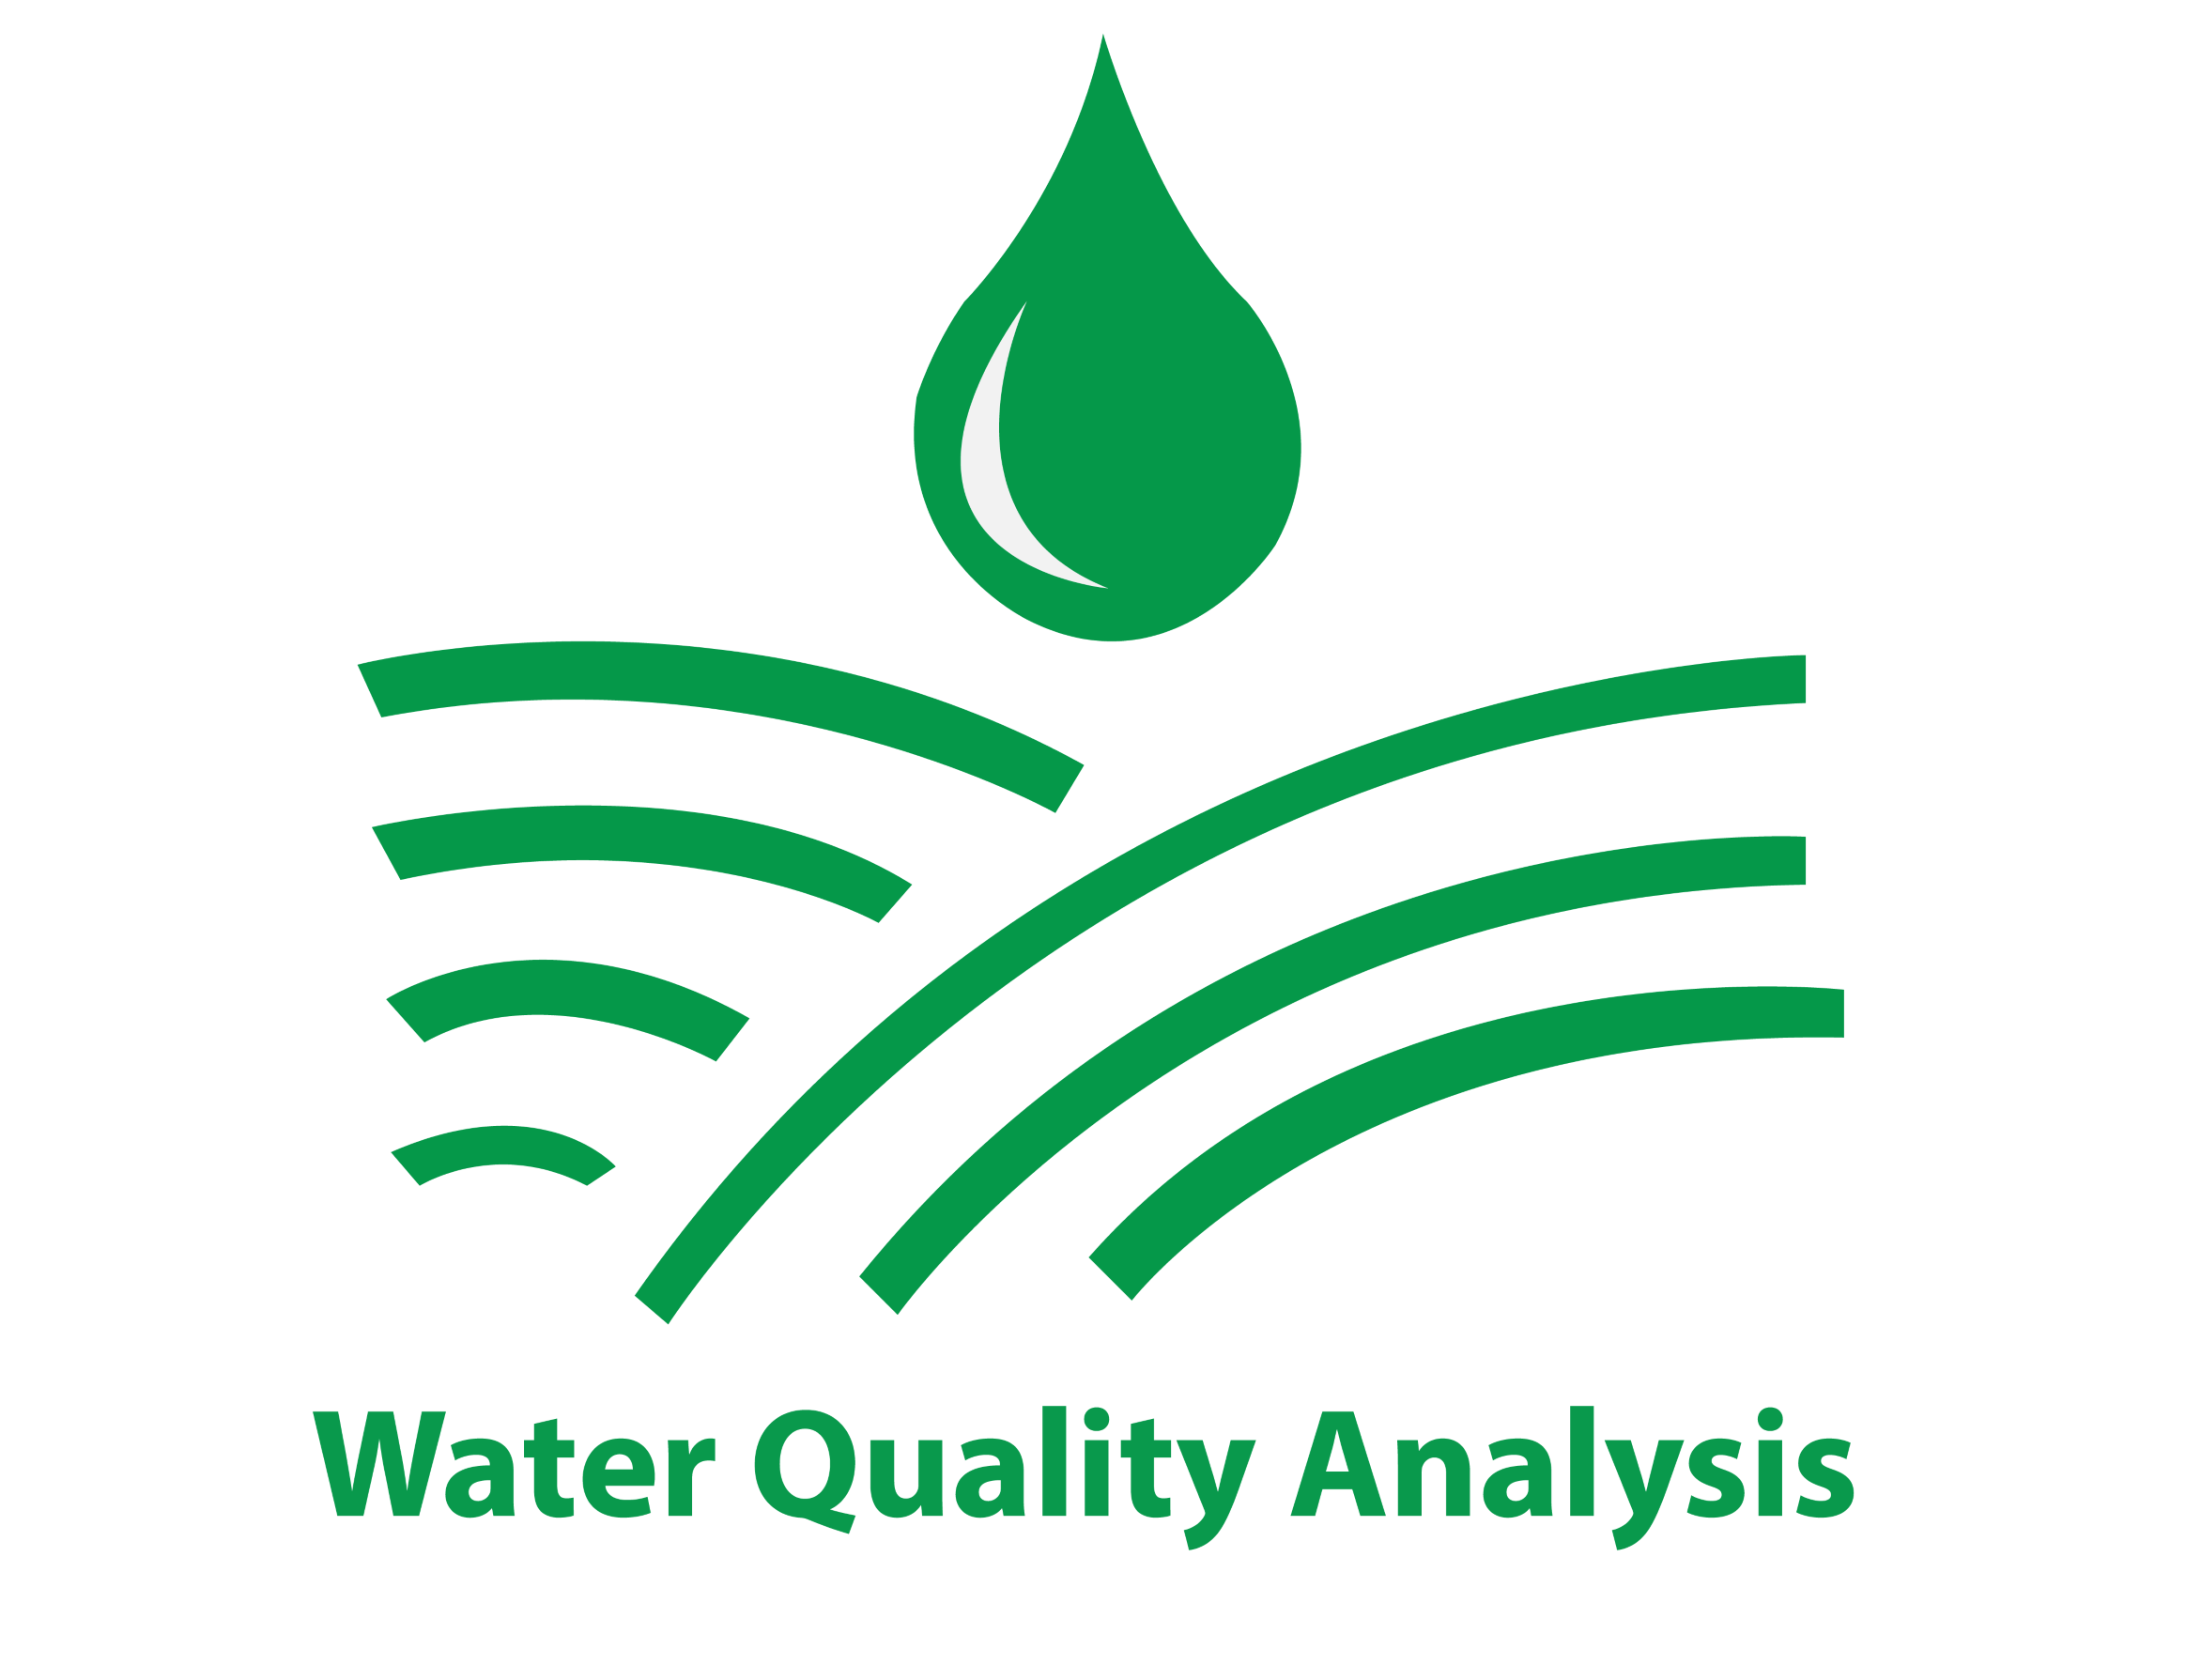 Water Quality Analysis